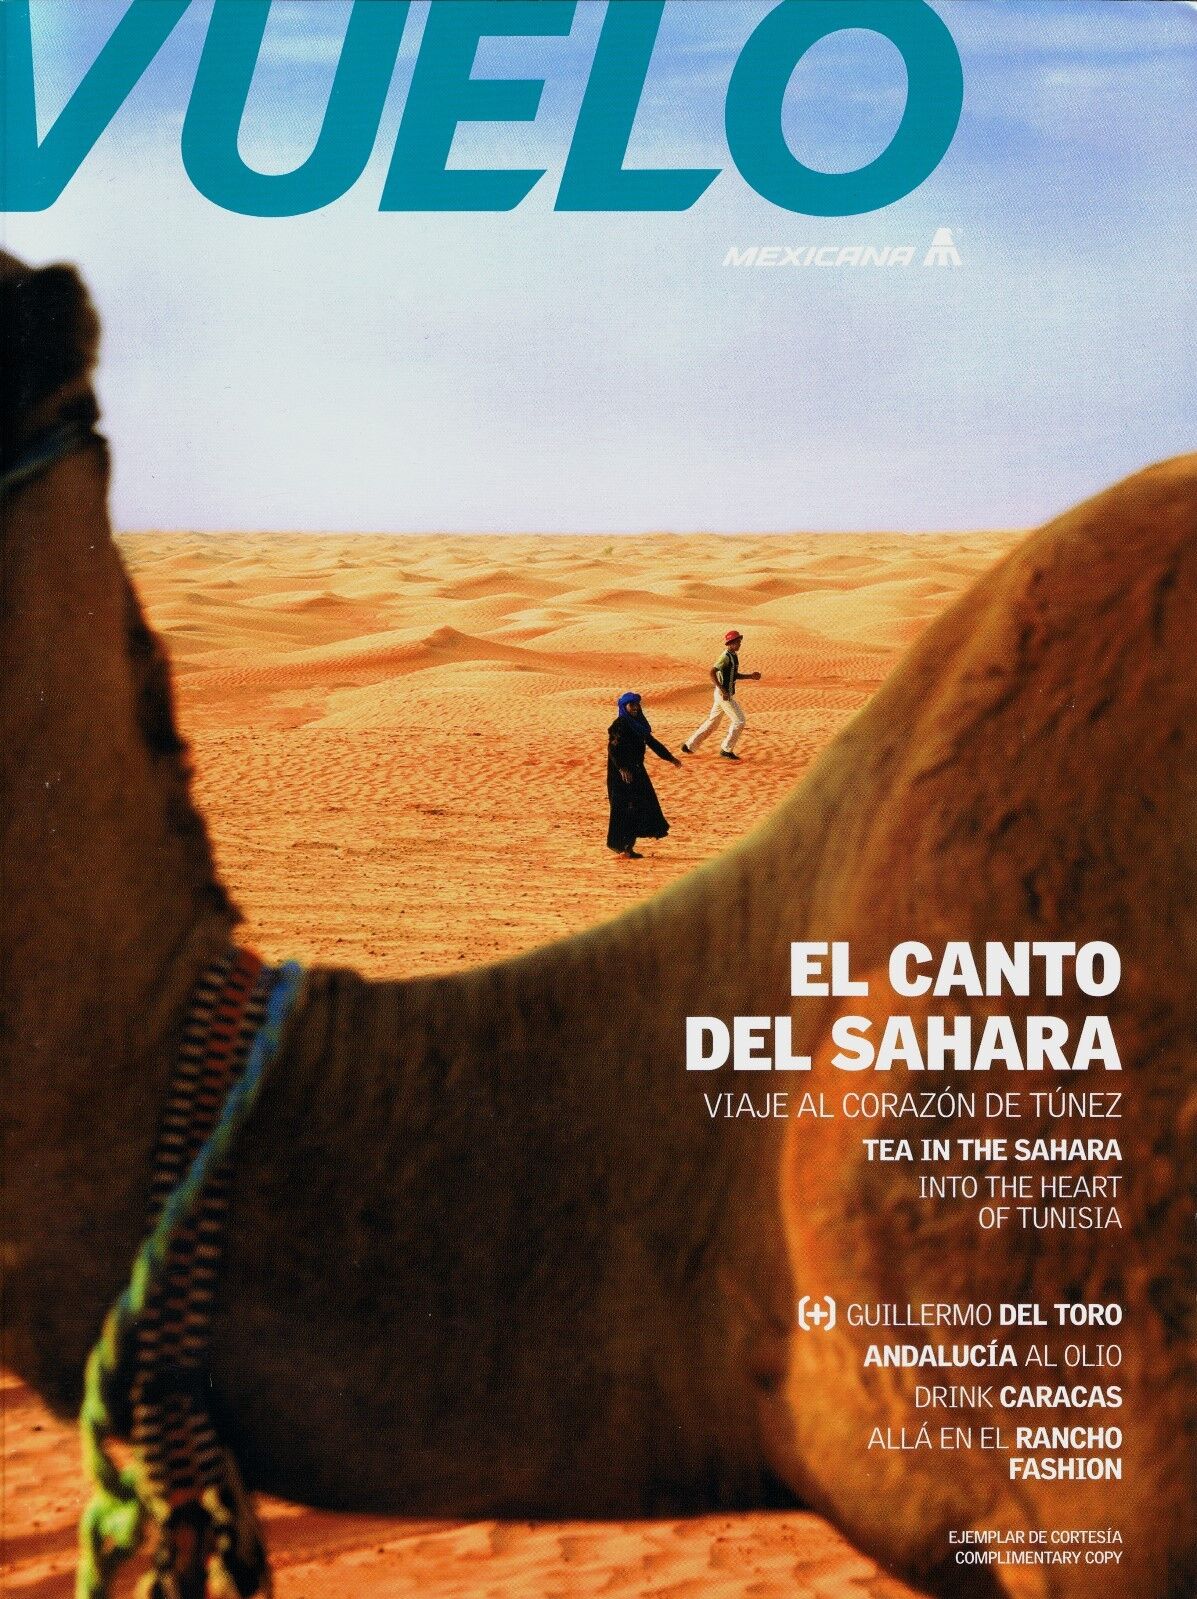 Mexicana Vuelo Inflight Magazine  November 2006 =